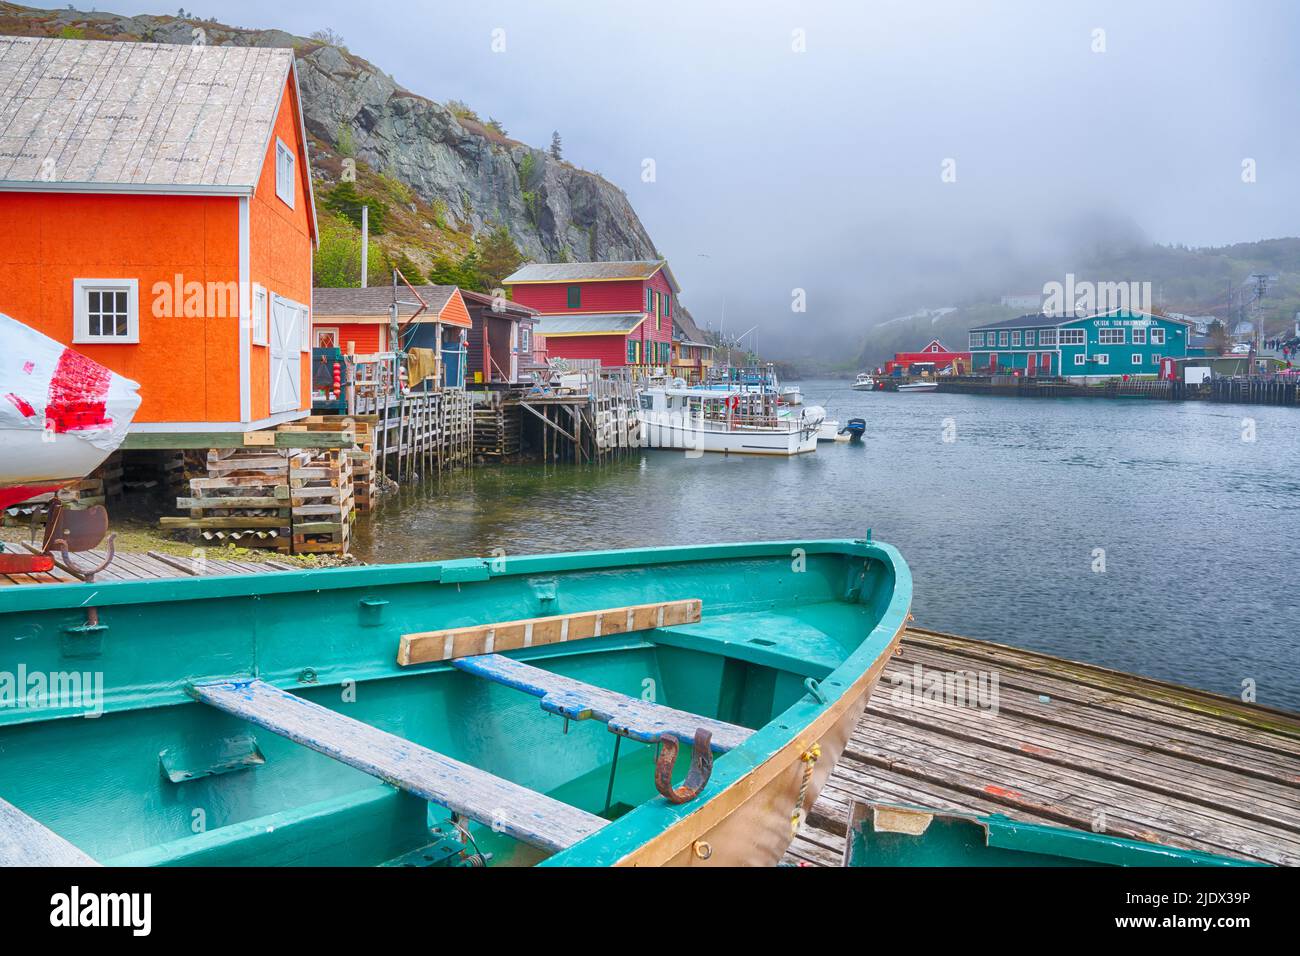 St John's, Newfoundland, CA - June 16, 2019: Historic old  fishing village of Quidi Vidi in St John's, Newfoundland, Canada Stock Photo